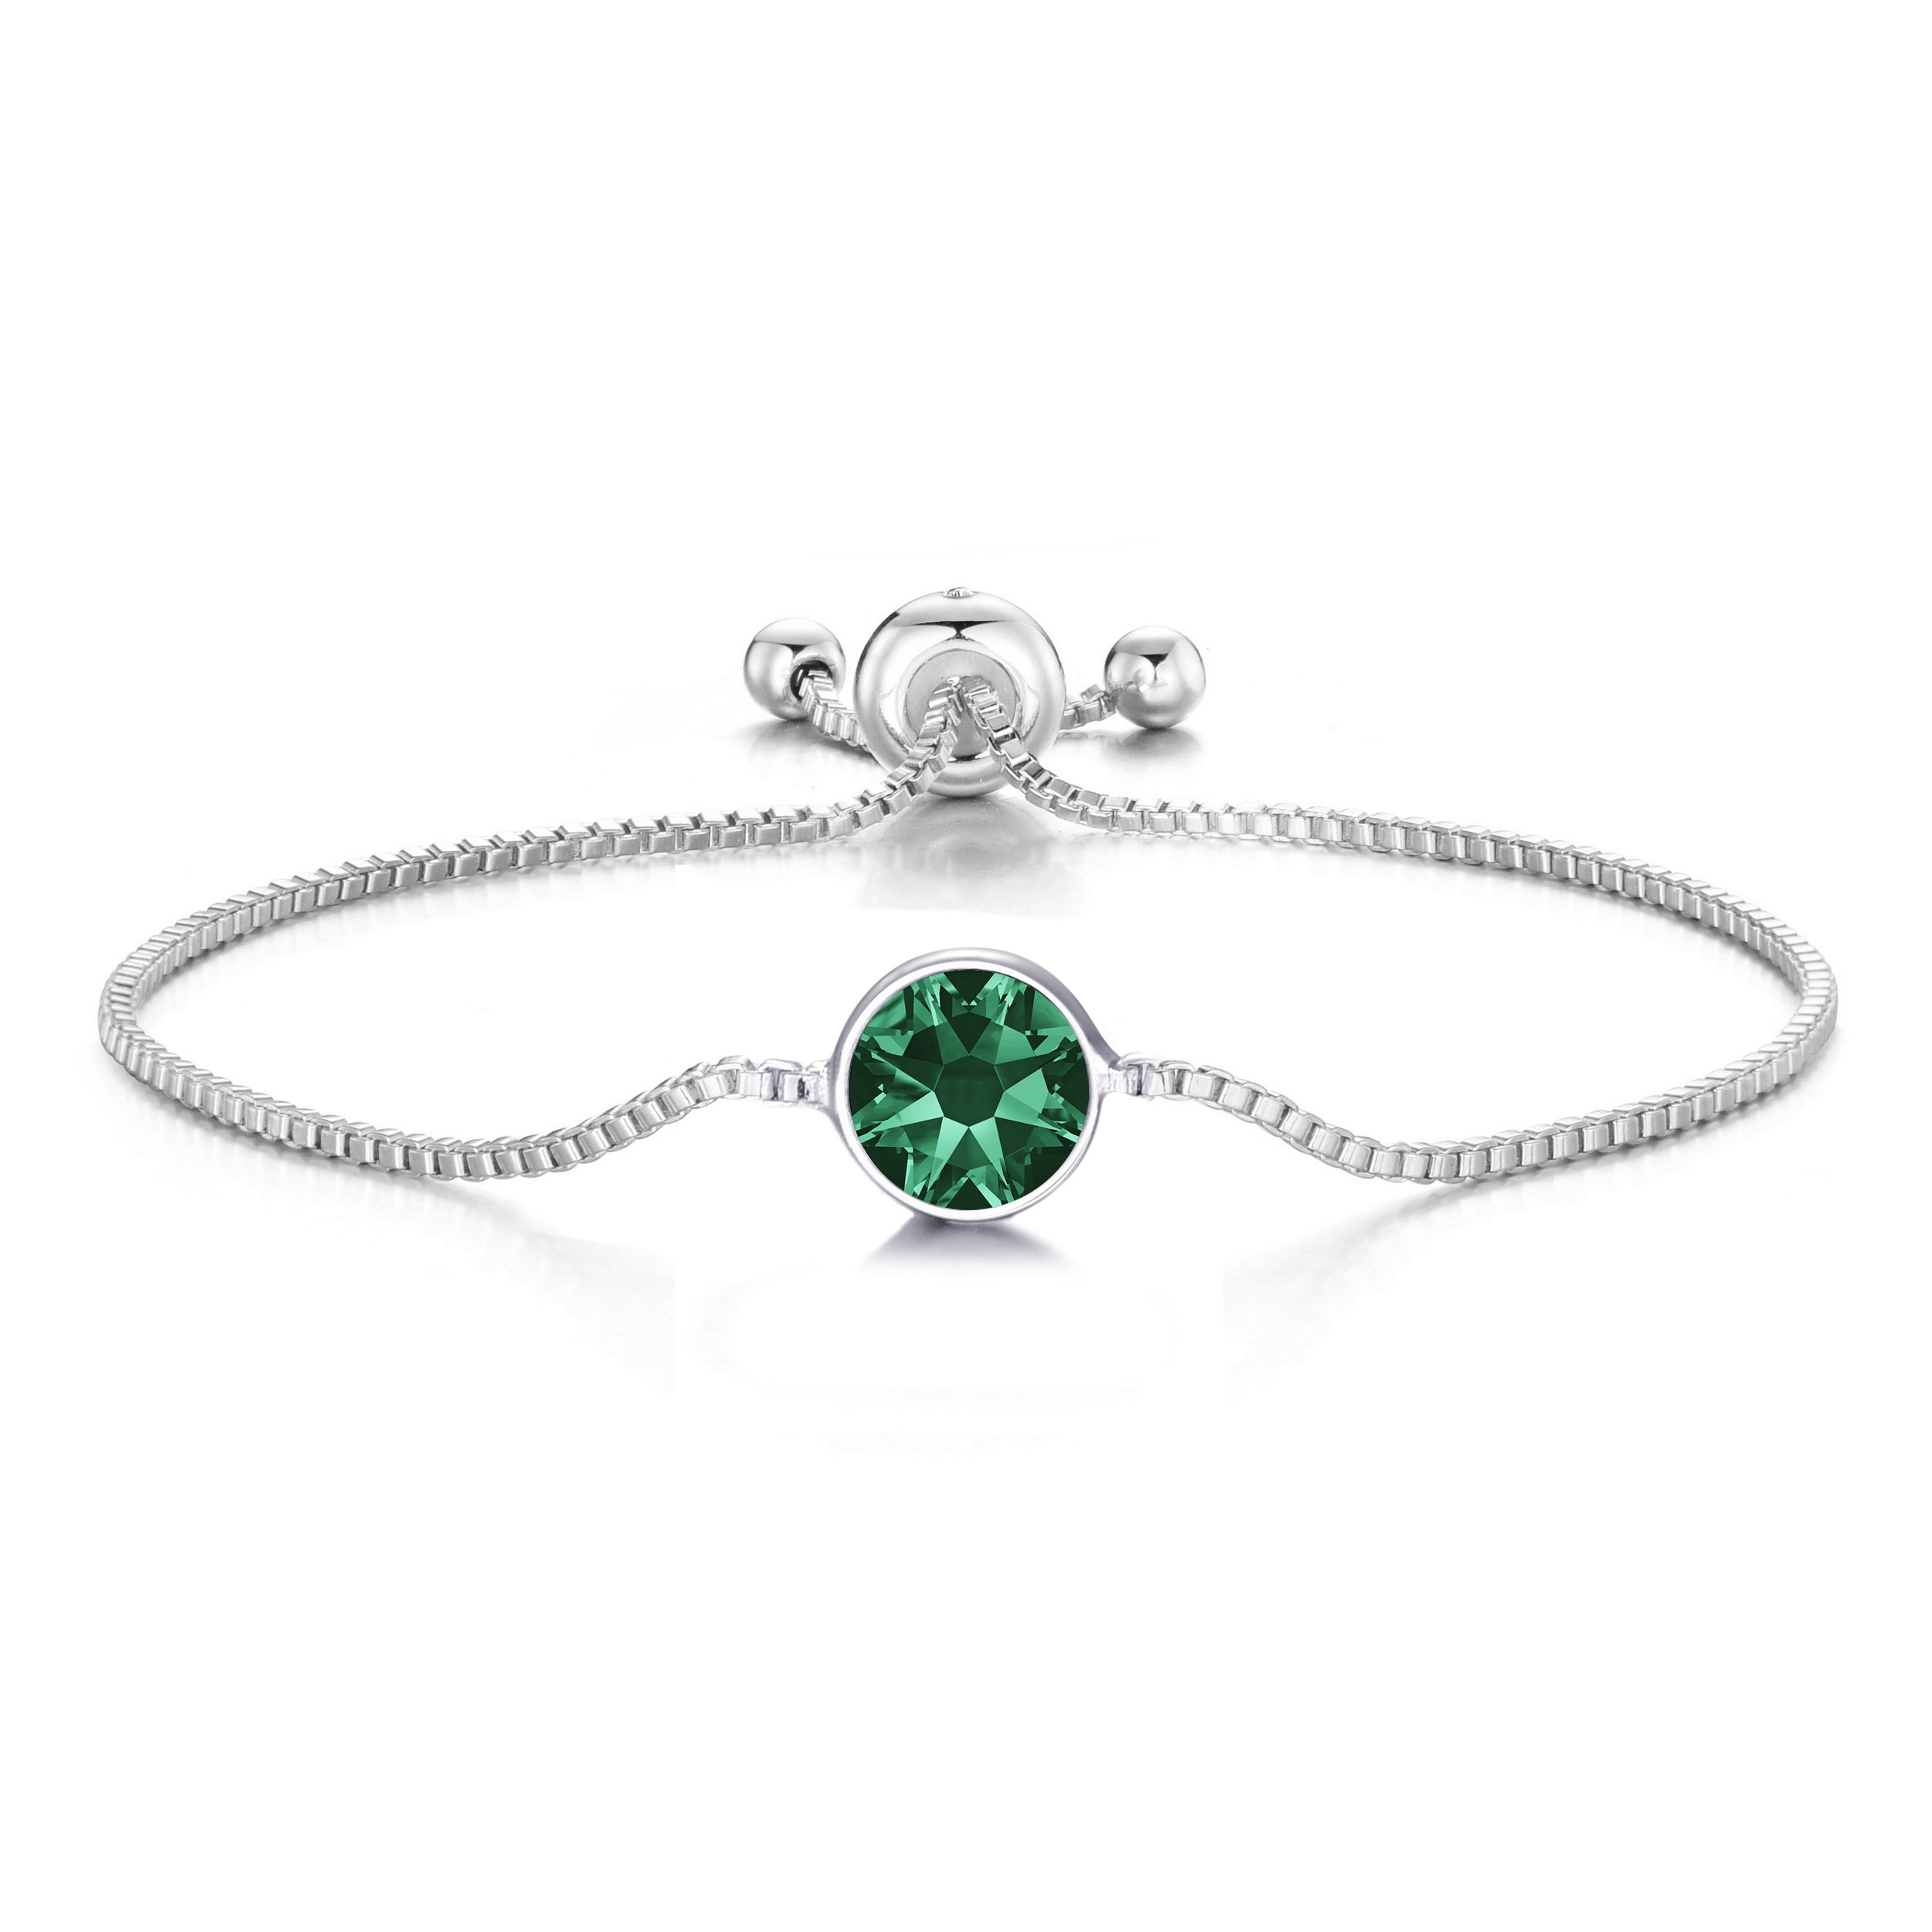 Green Crystal Bracelet Created with Zircondia® Crystals by Philip Jones Jewellery